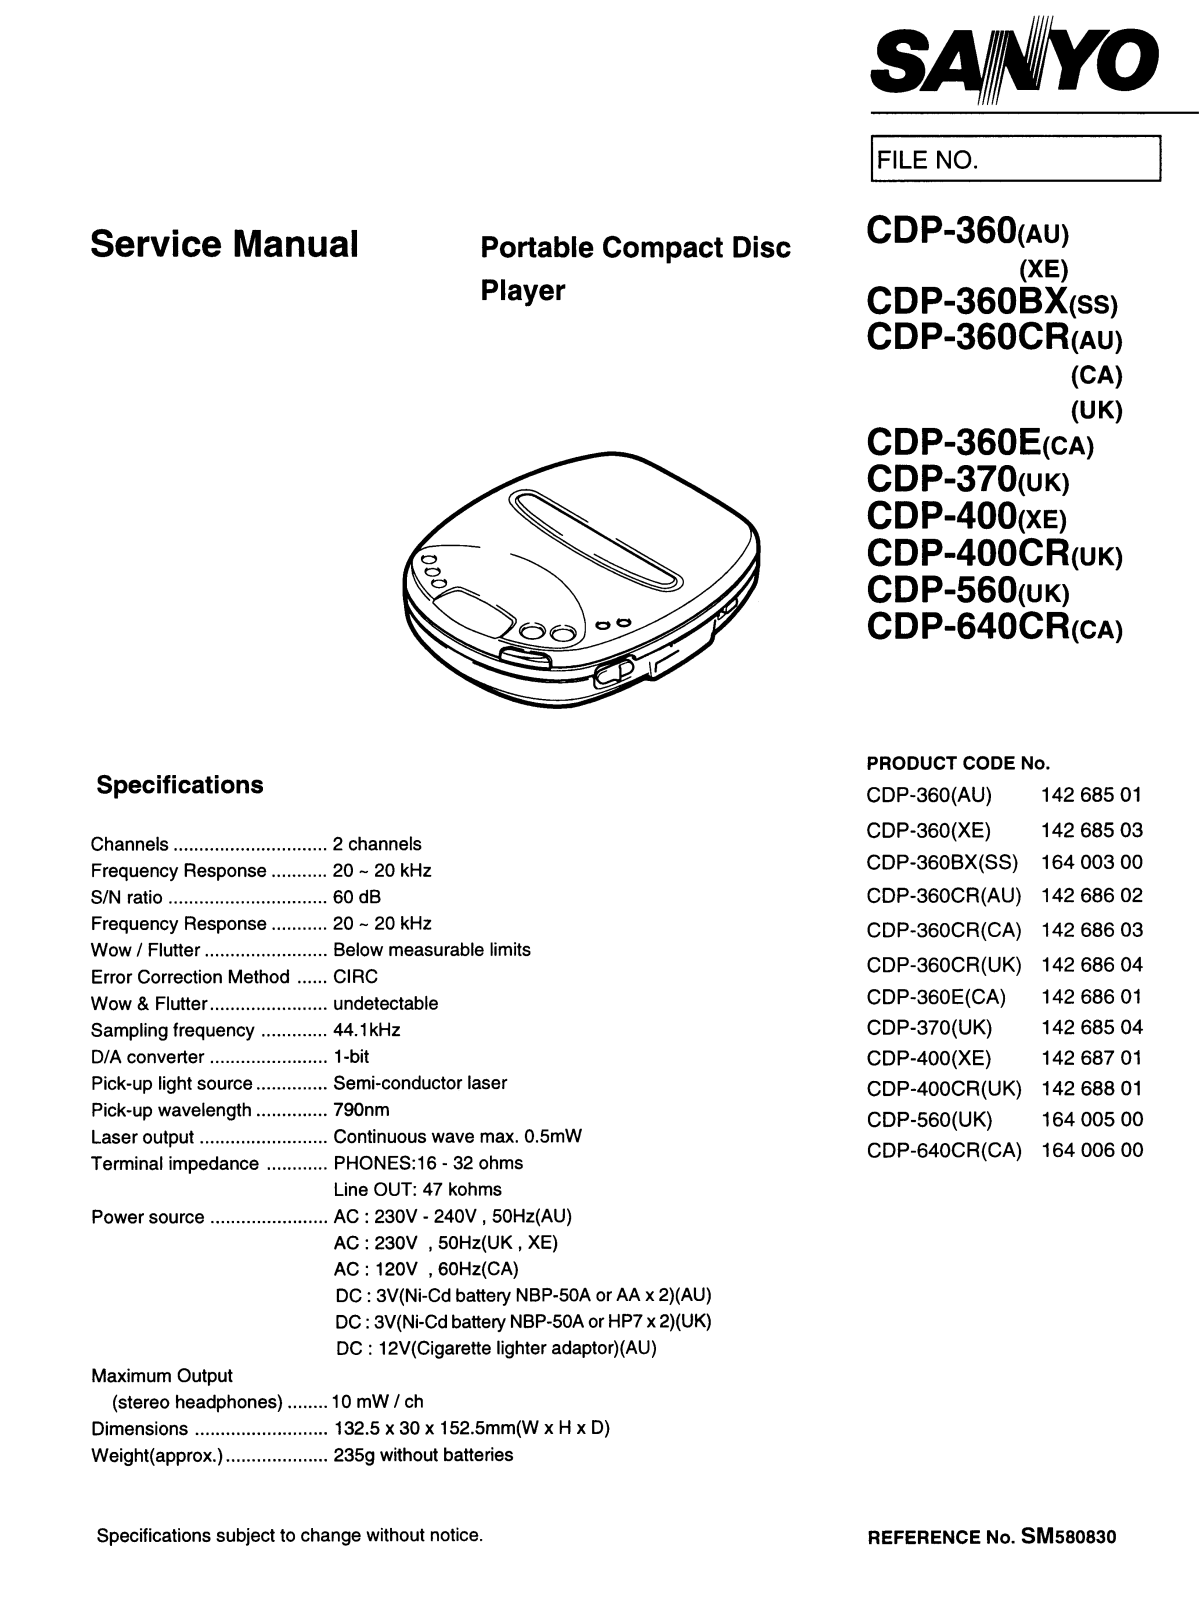 Sanyo CDP-640CR, CDP-360E, CDP-360CR, CDP-360BX, CDP-400CR Service Manual